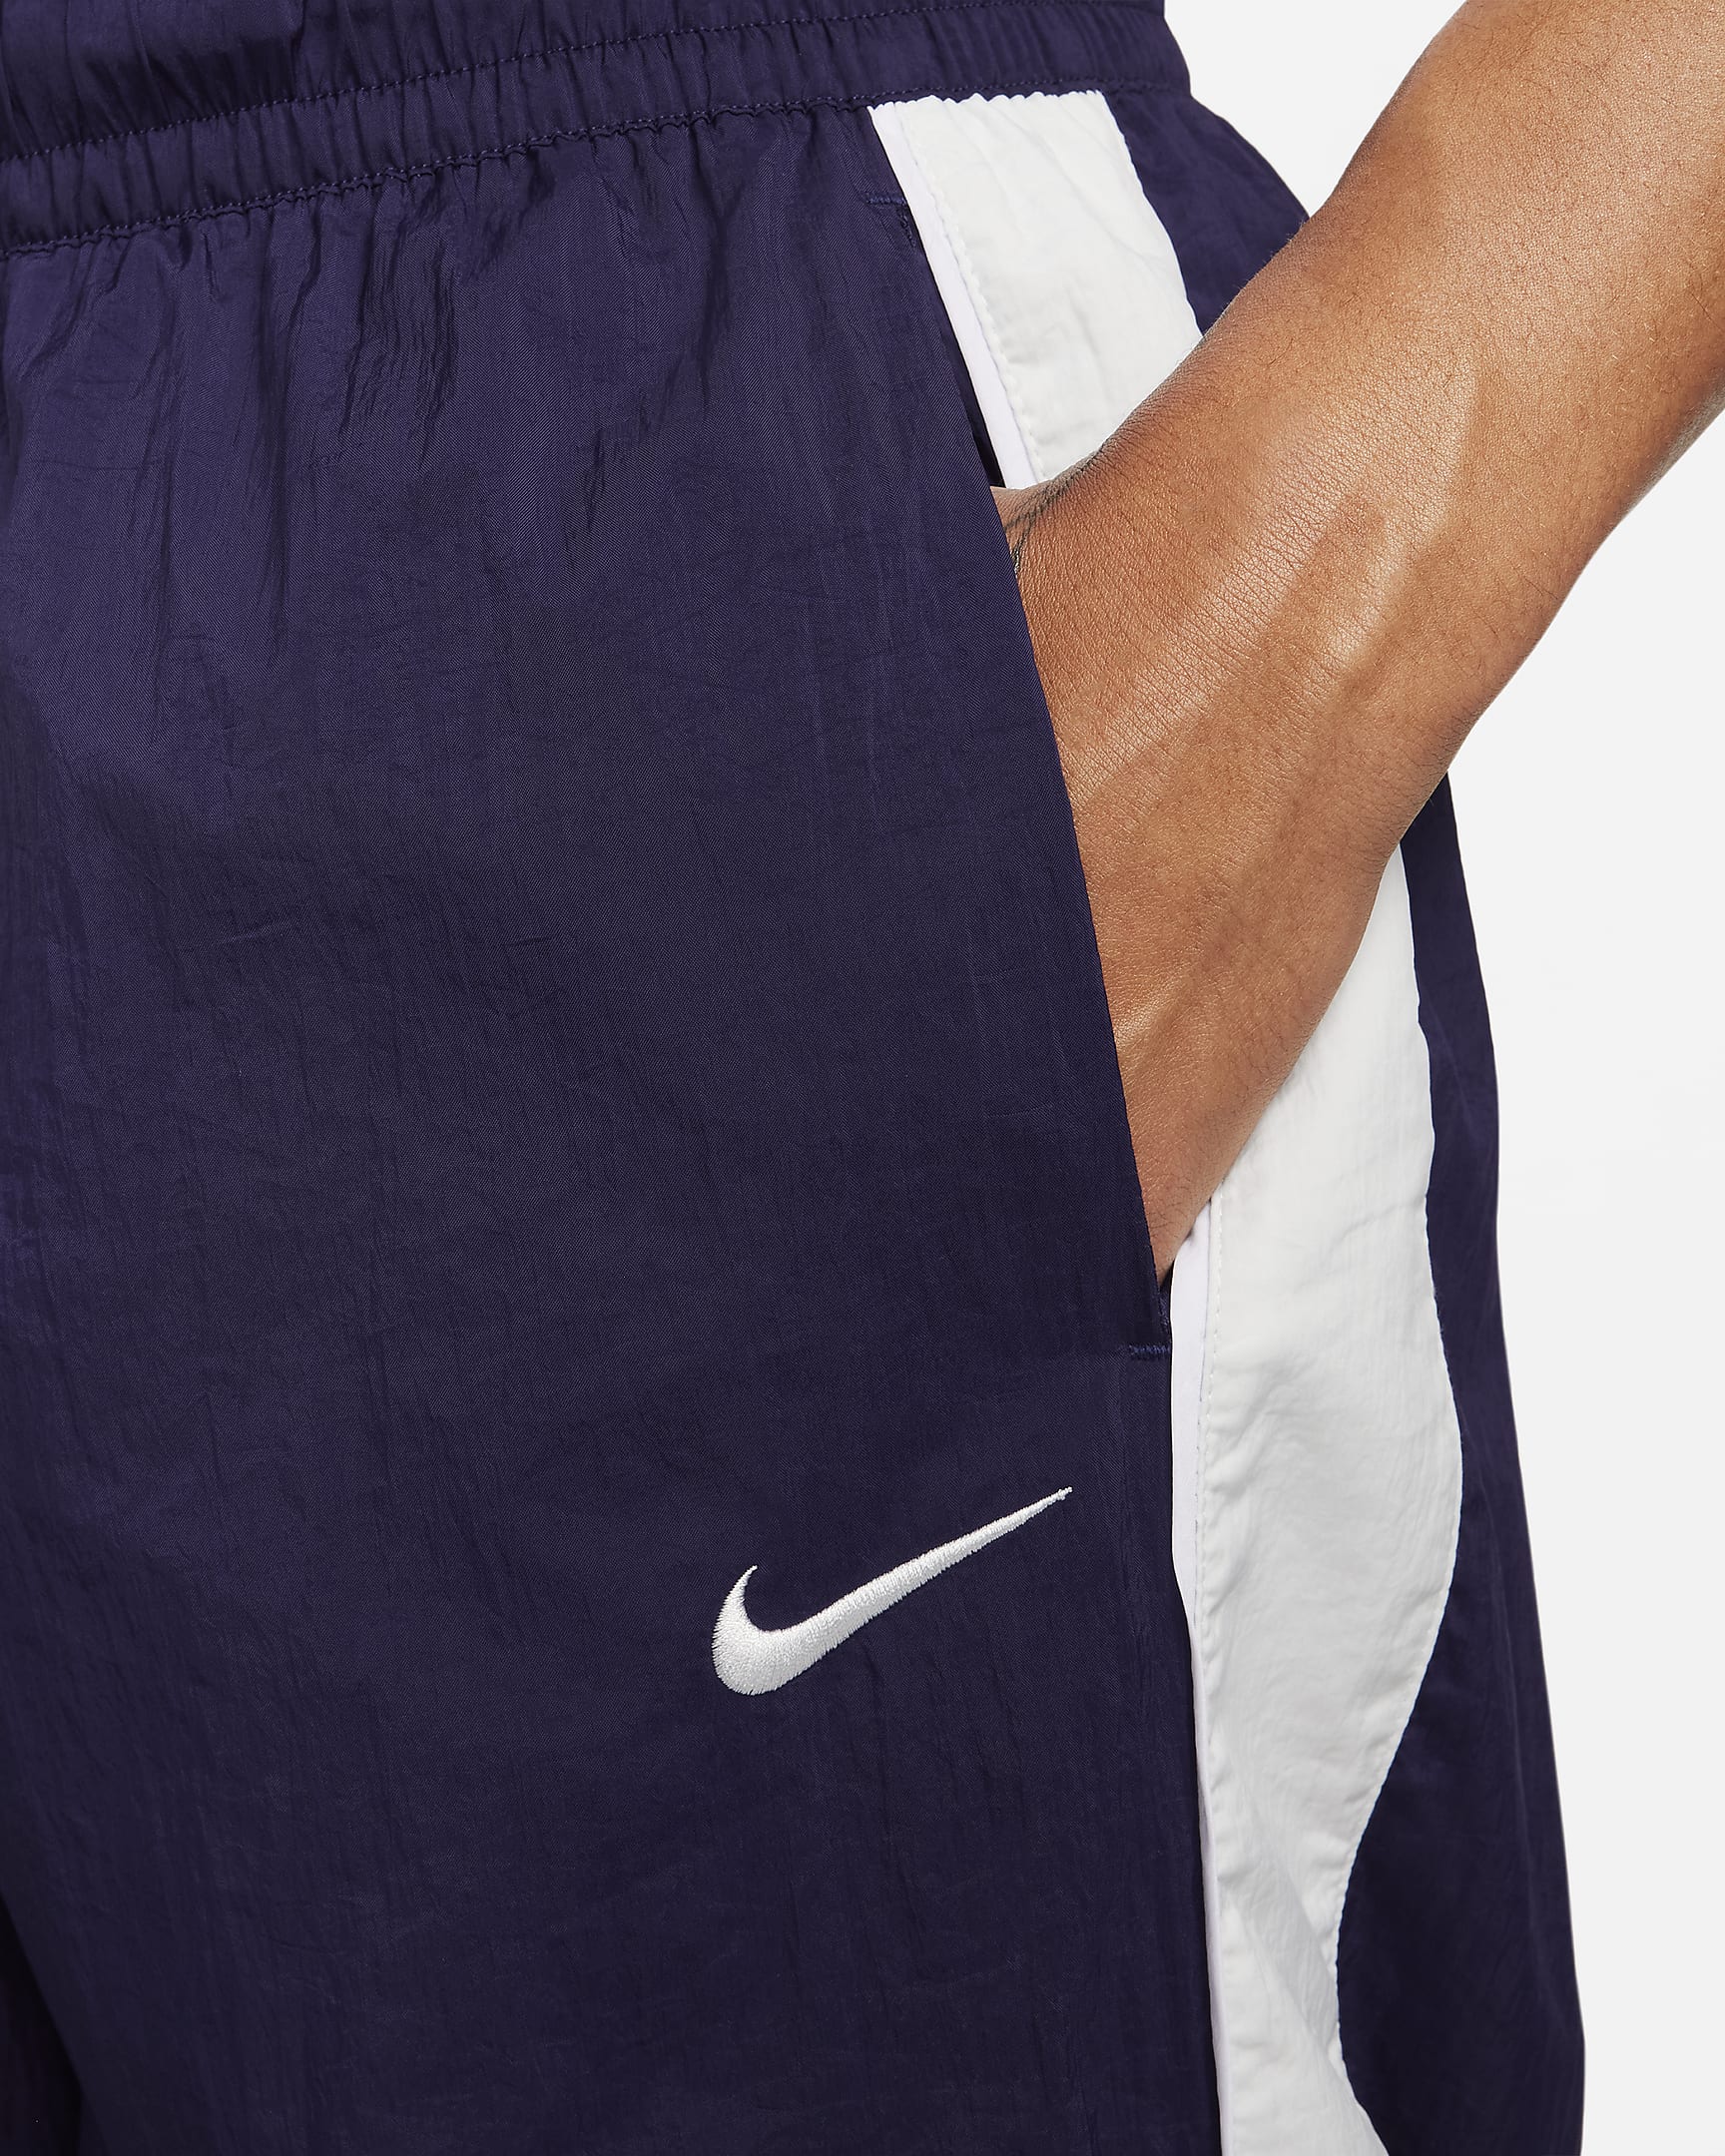 Nike Men's Woven Basketball Trousers. Nike UK